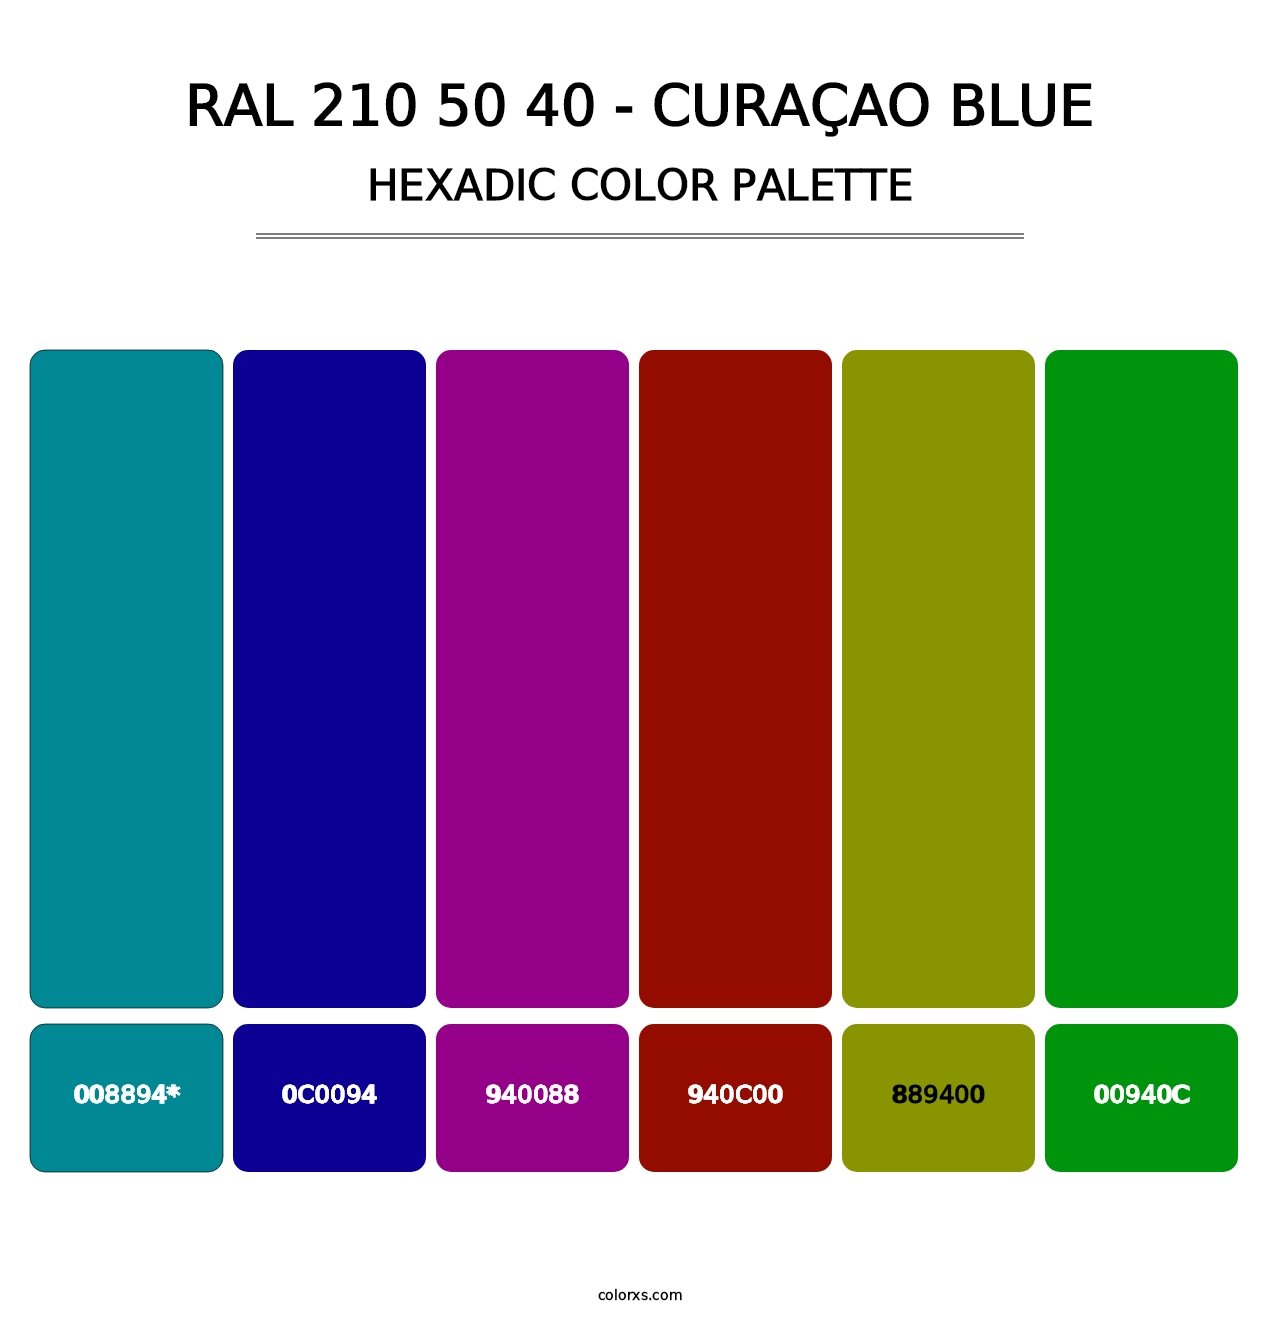 RAL 210 50 40 - Curaçao Blue - Hexadic Color Palette